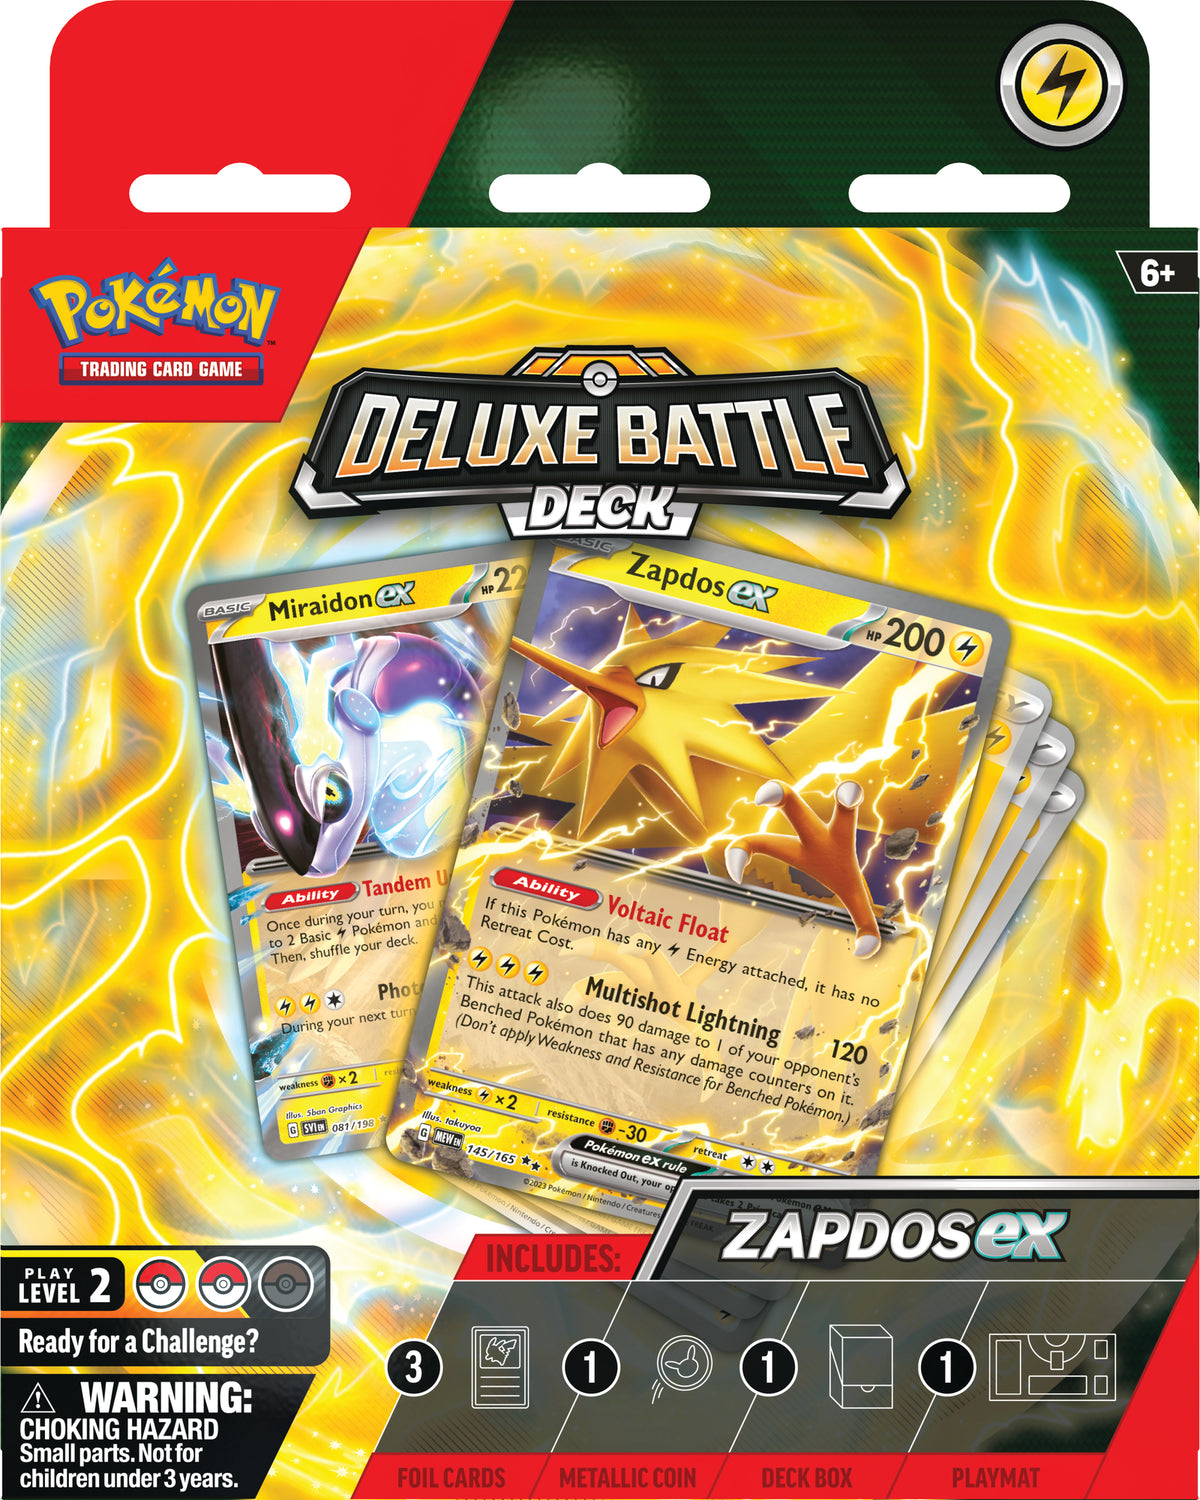 Pokémon Deluxe Battle Deck | Zapdos ex